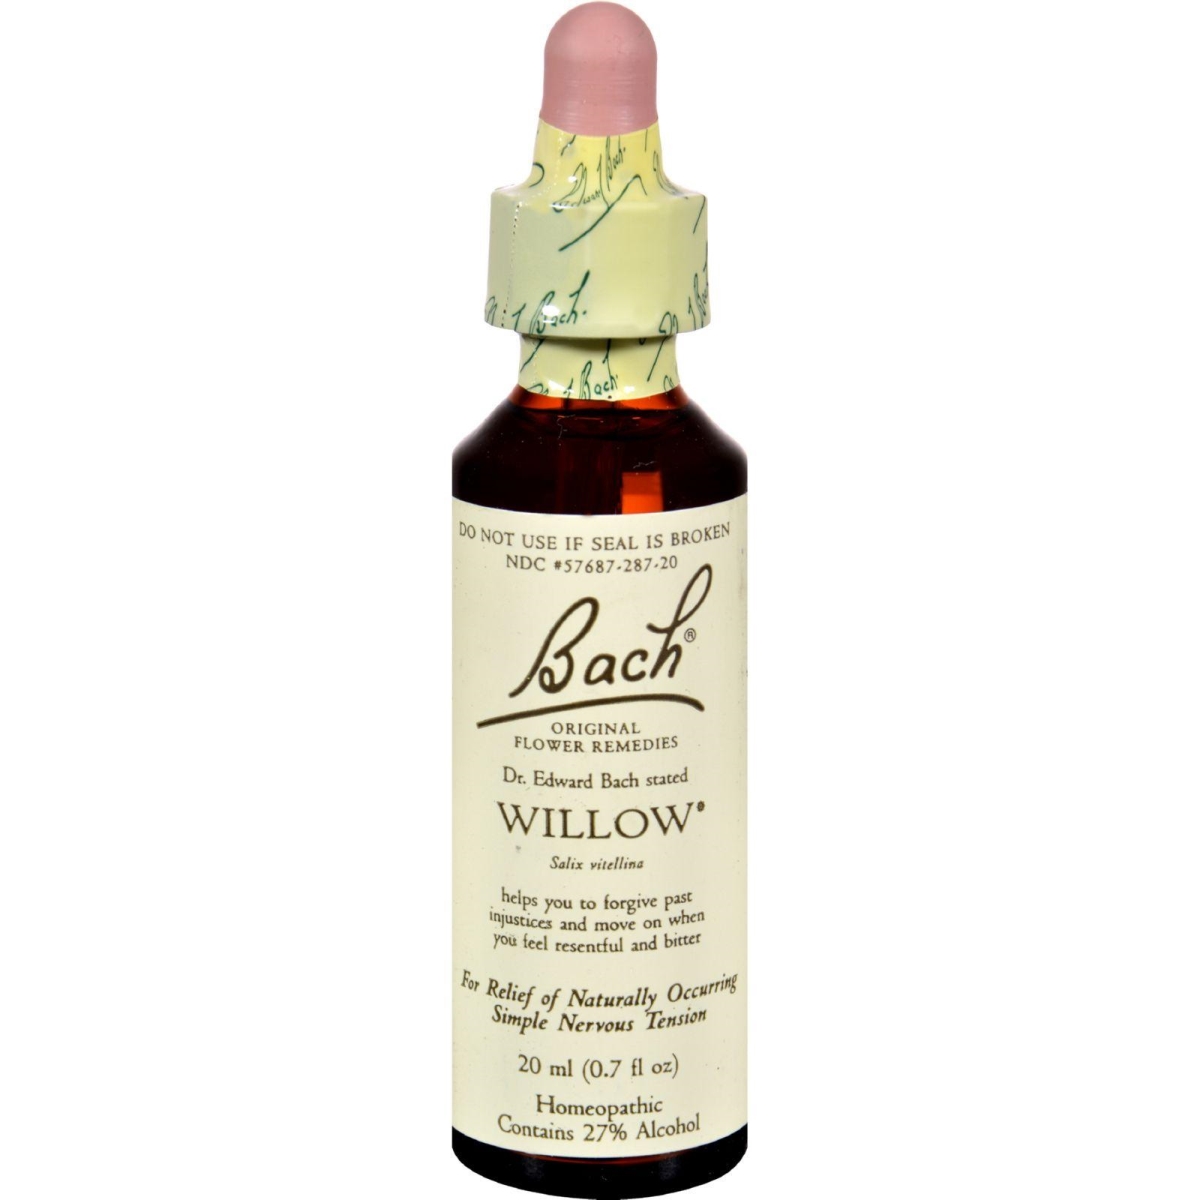 Hg0234088 0.7 Fl Oz Flower Remedies Essence, Willow